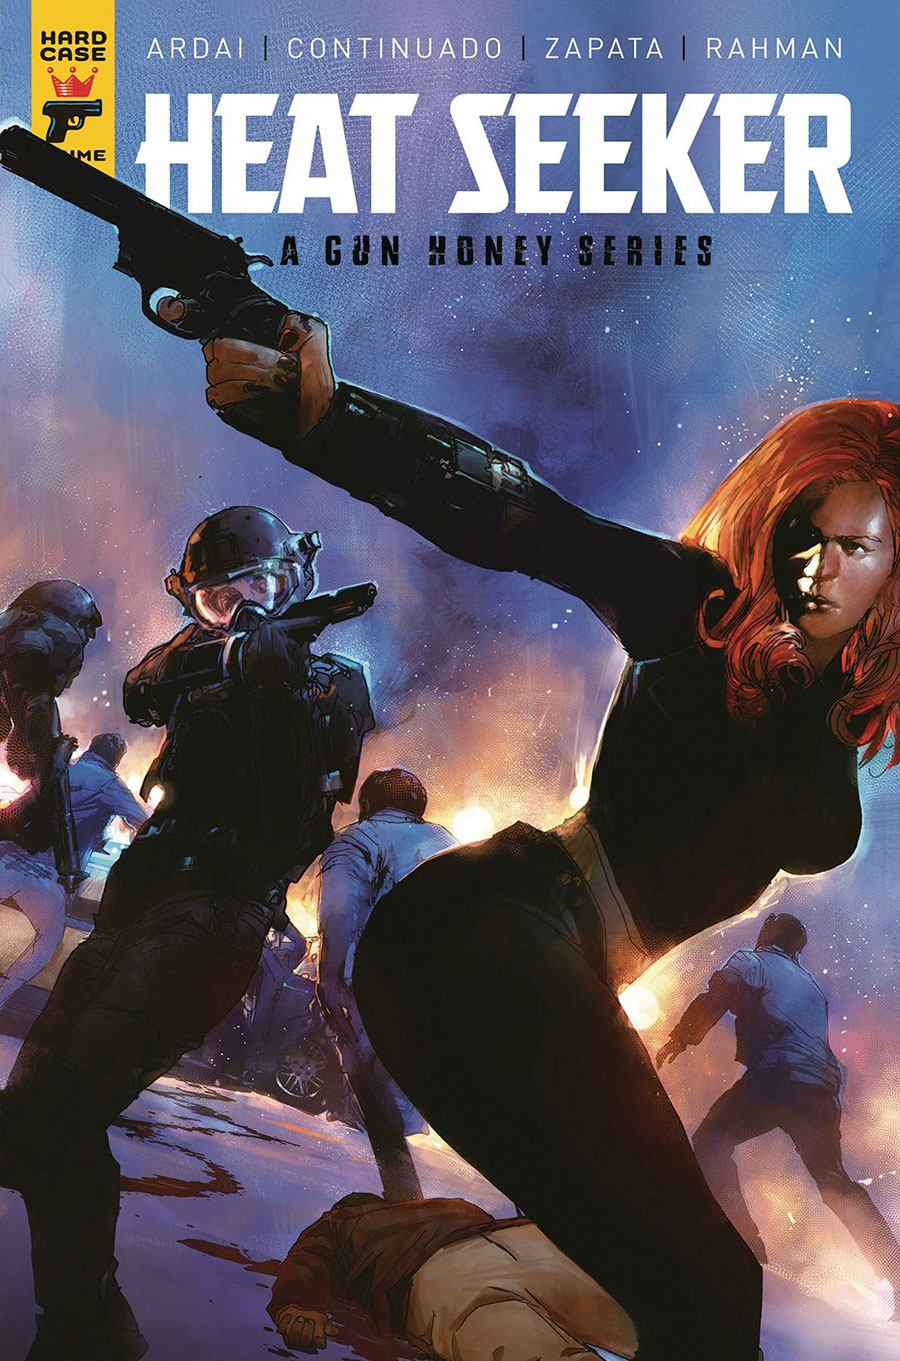 Hard Case Crime Heat Seeker A Gun Honey Series Vol 1 TP Direct Market Bill Sienkiewicz Variant Cover